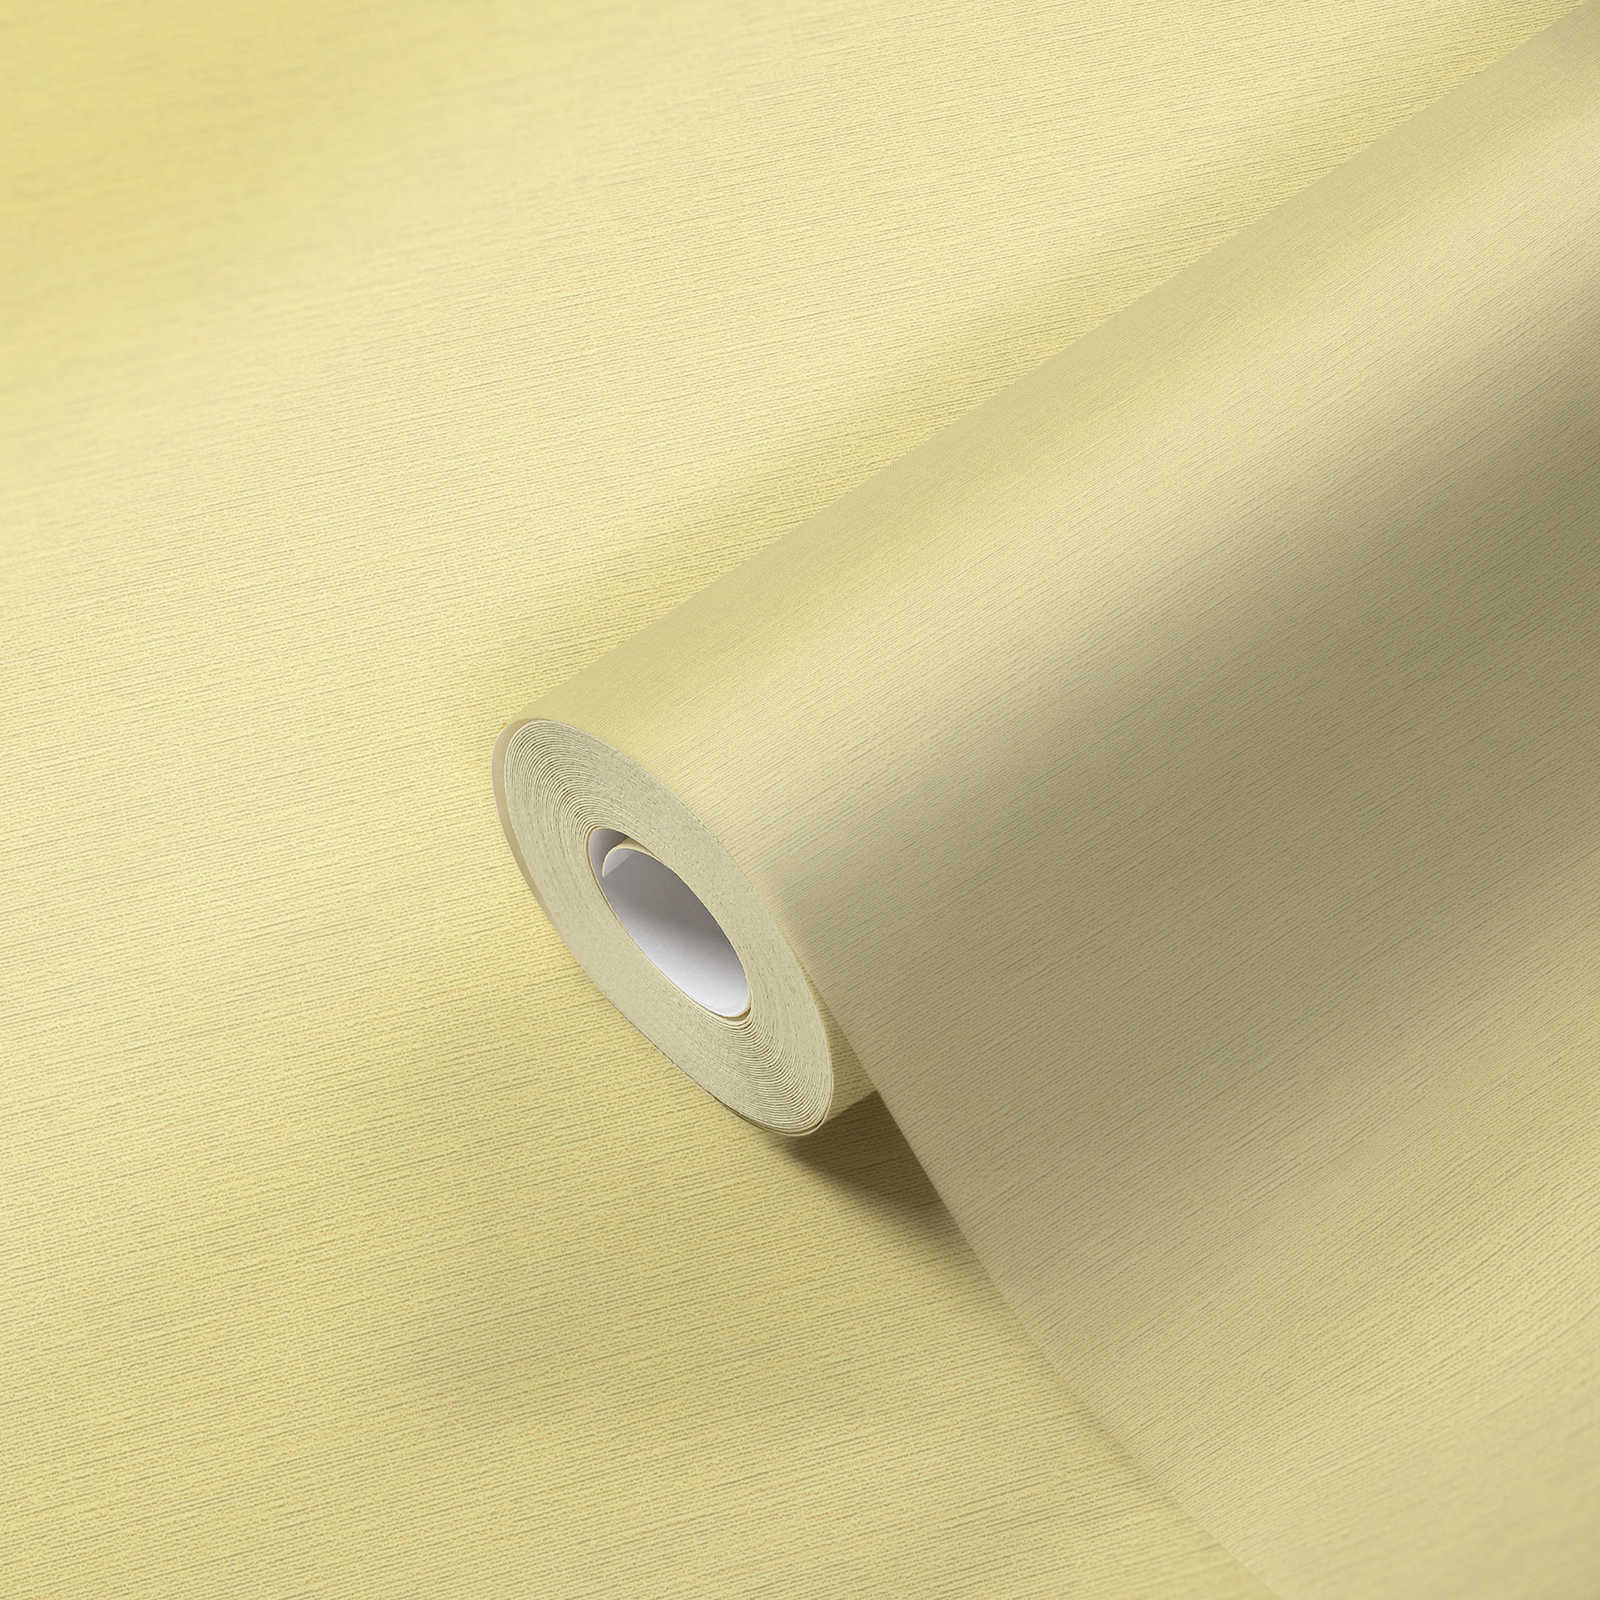             Pastel wallpaper yellow plain with textile texture
        